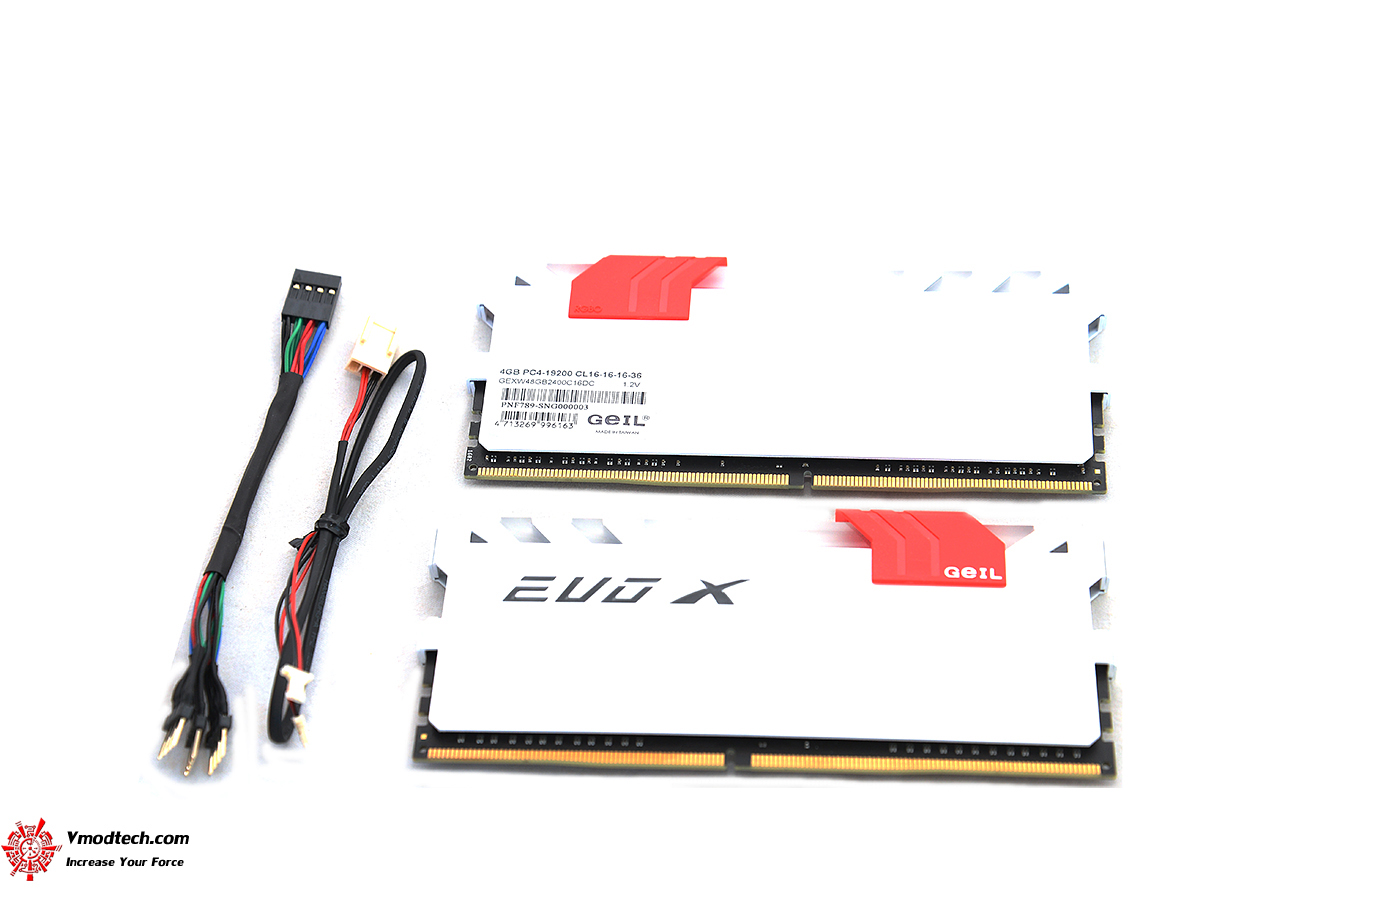 dsc 72501 GEIL EVO X RGB DDR4 2400Mhz 8GB CL16 Review 